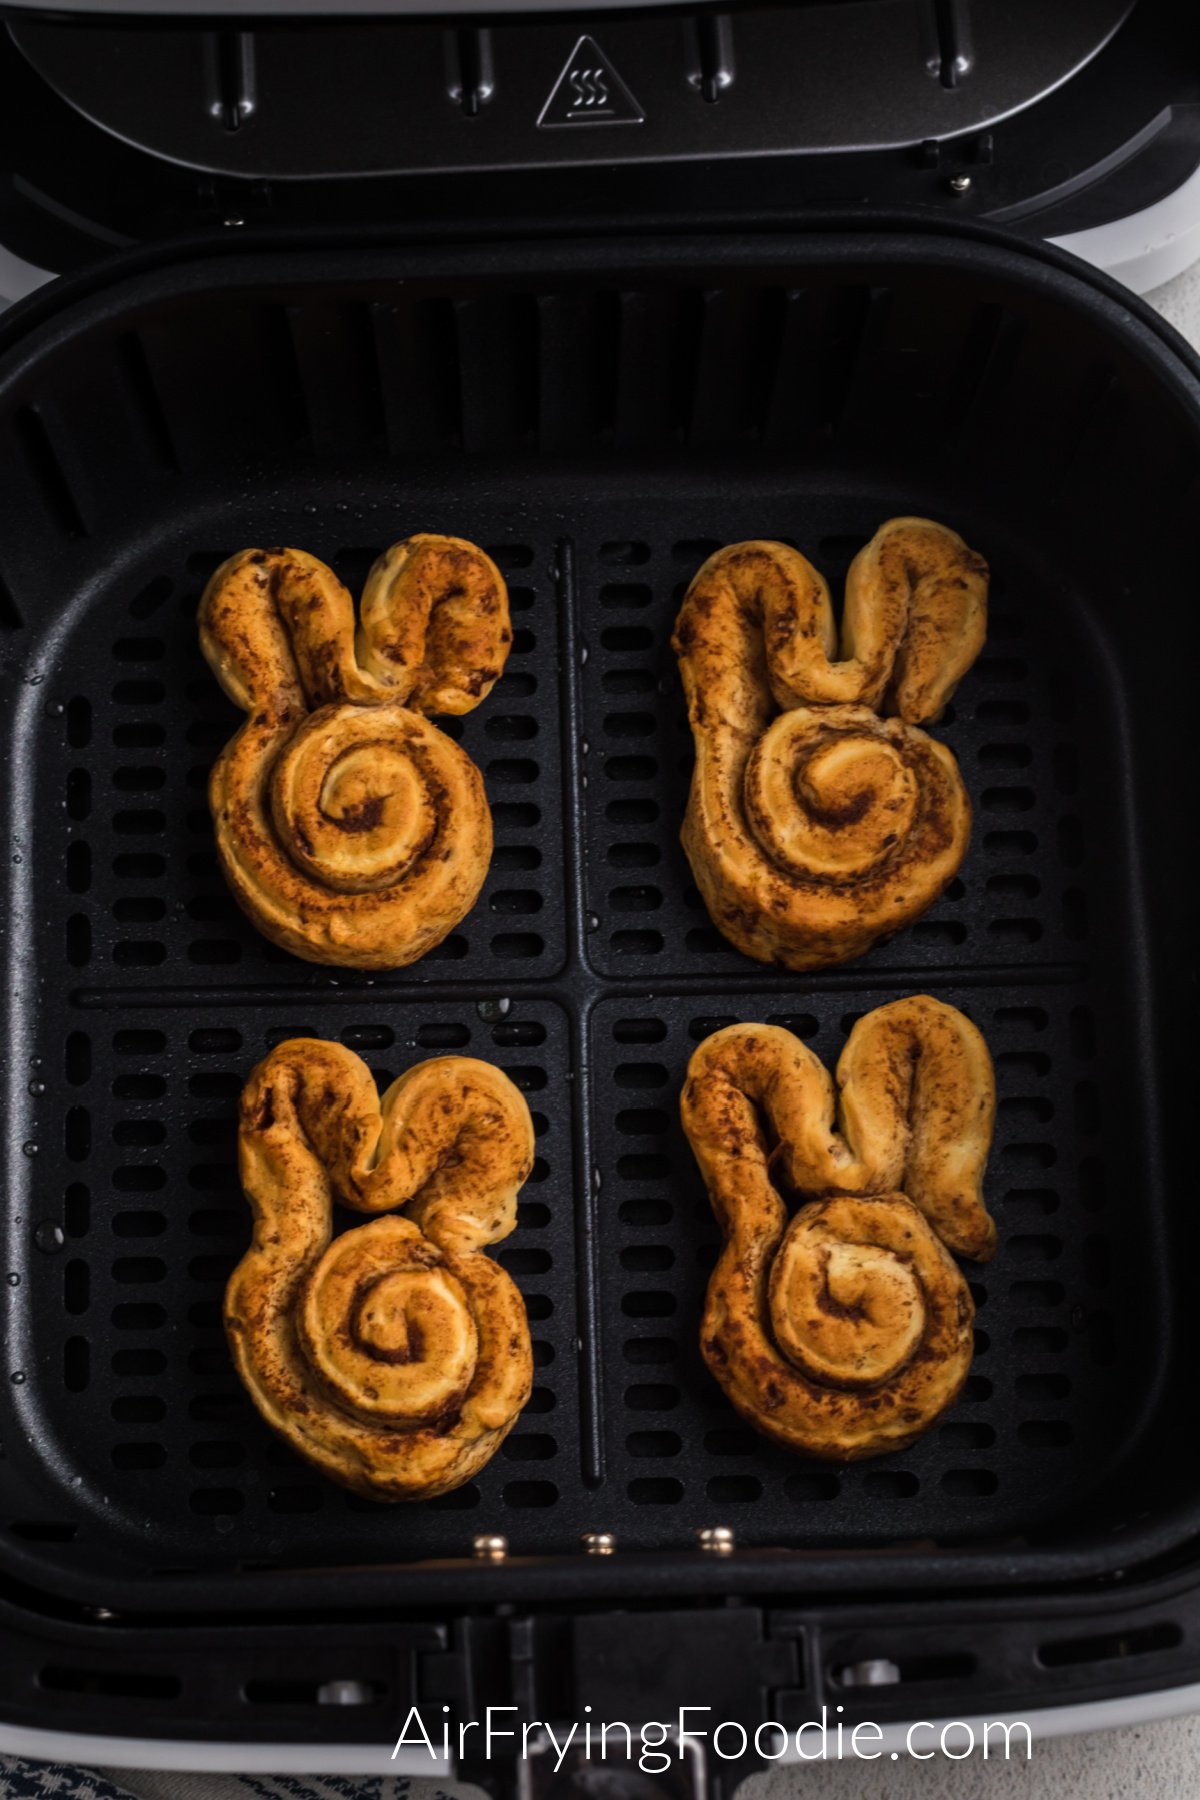 Air fried cinnamon rolls in the shape of bunnies in the air fryer basket.